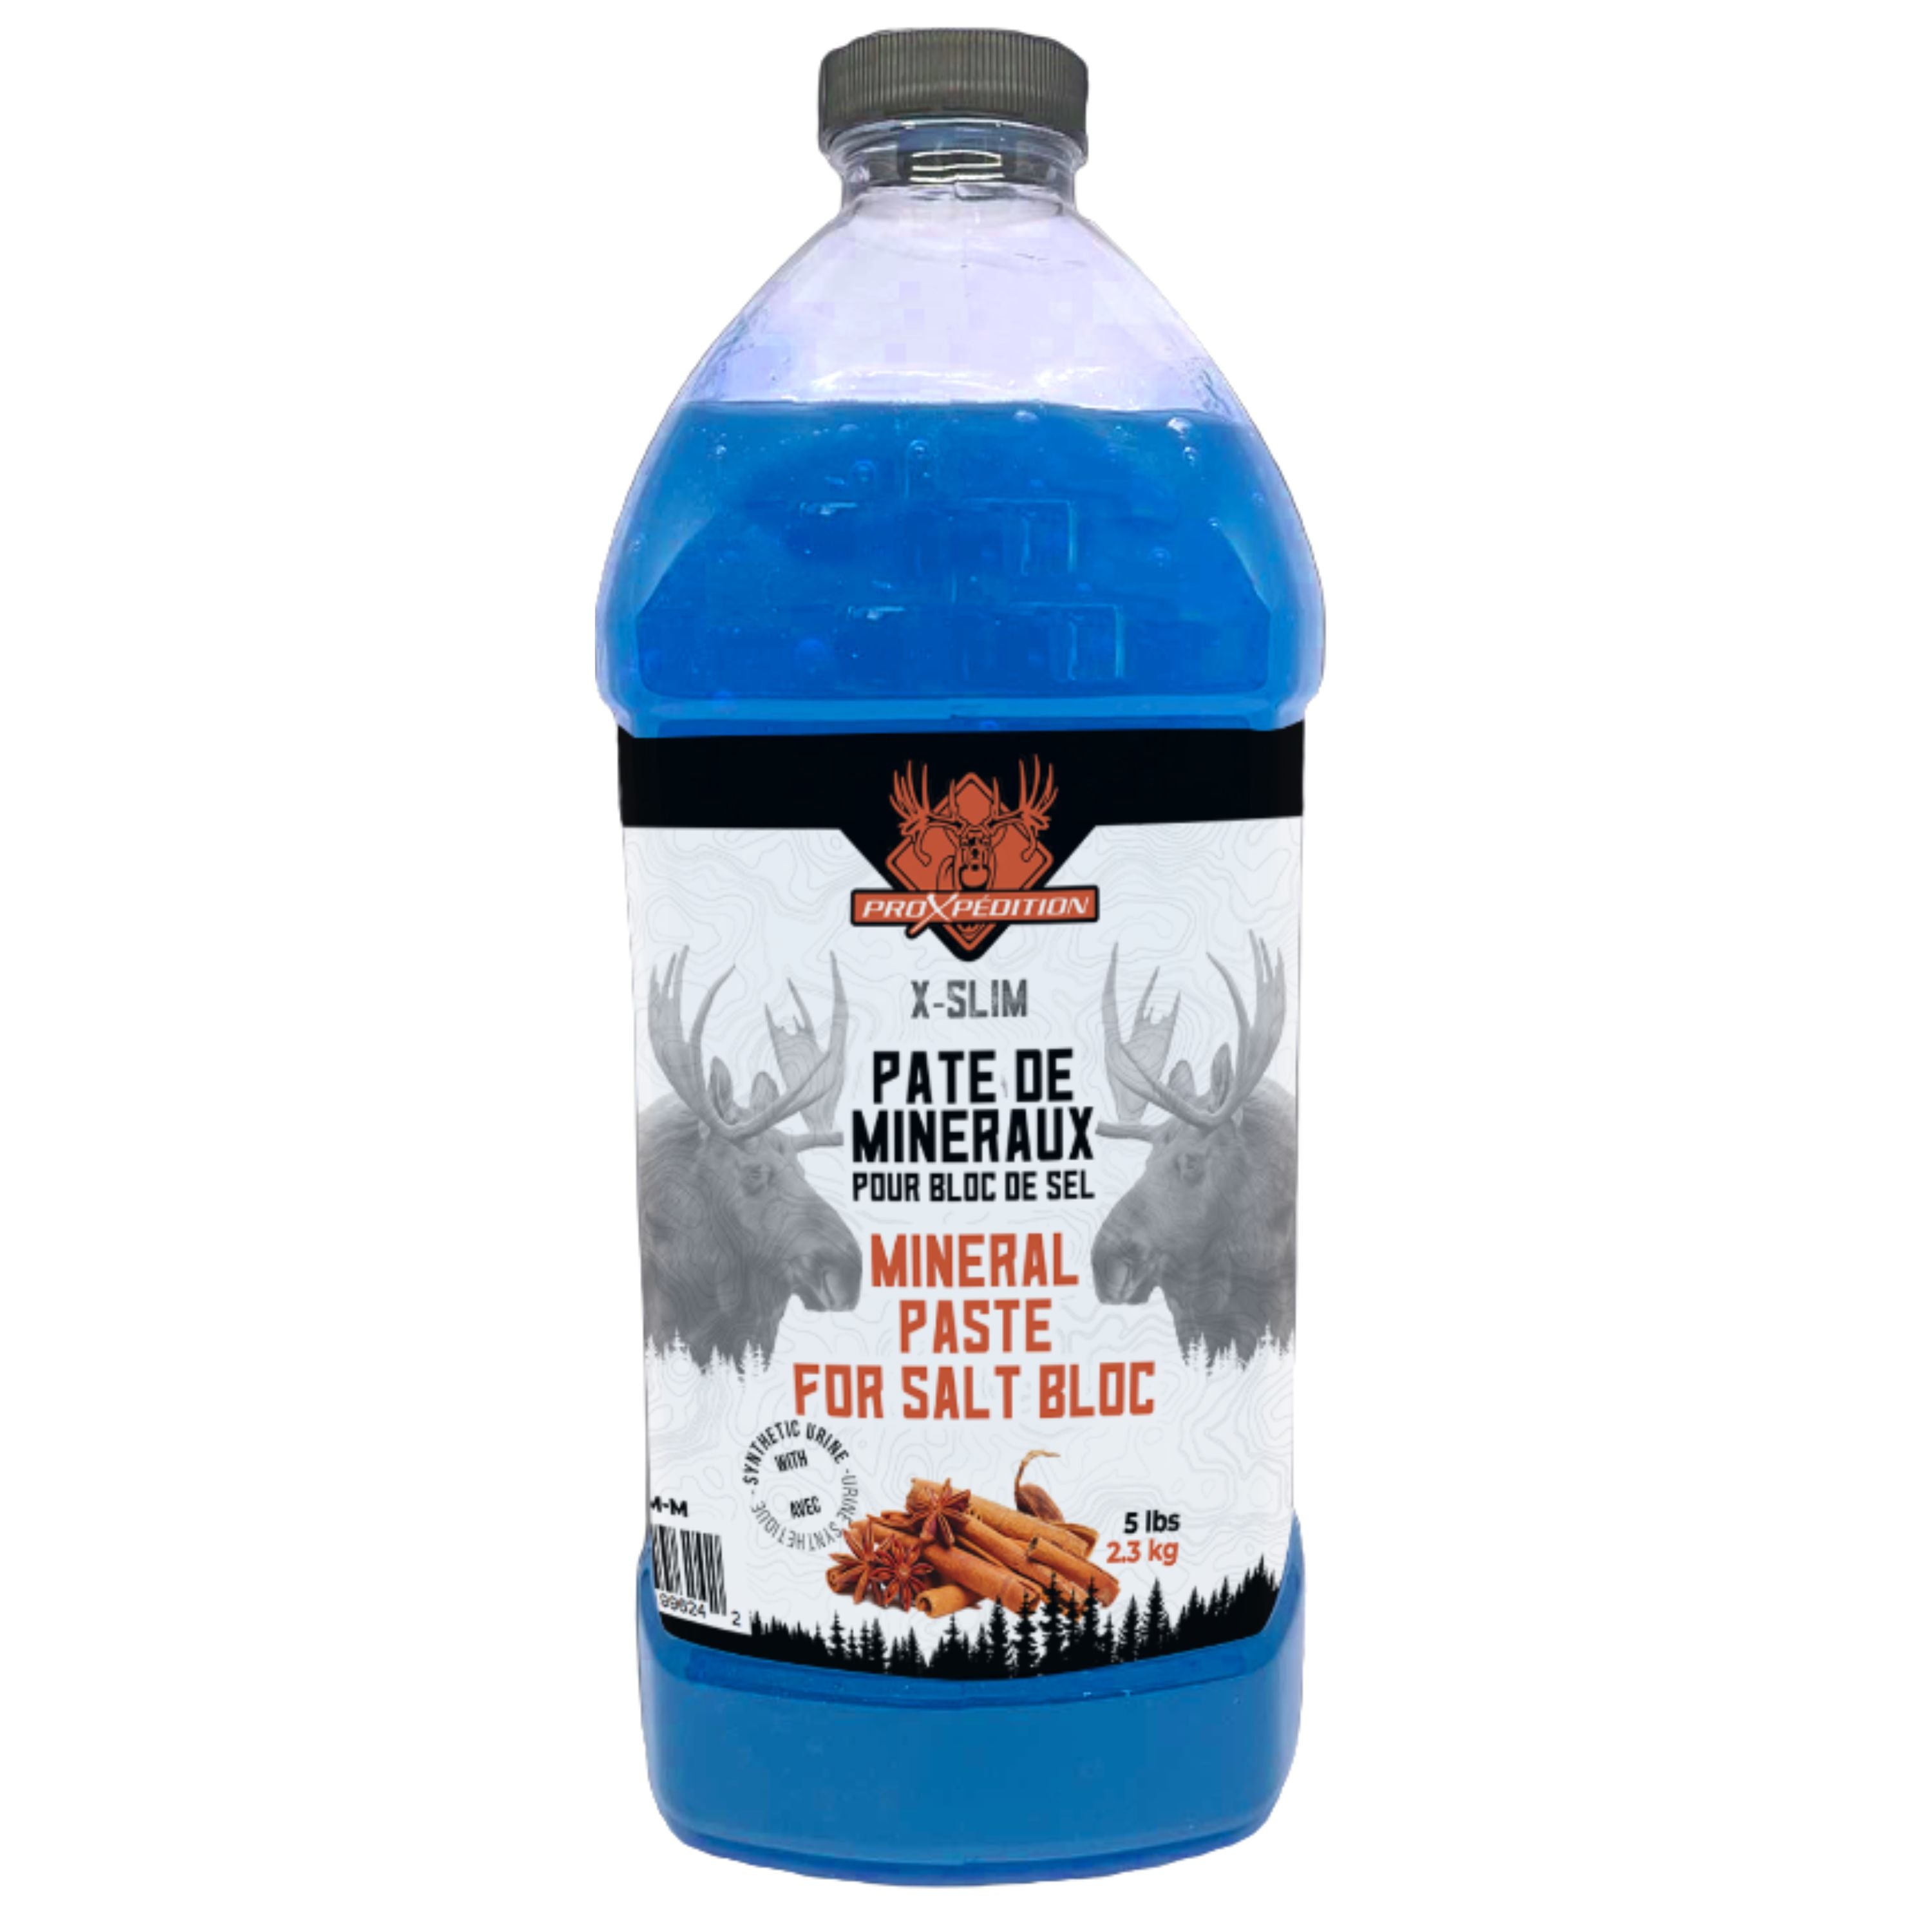 "X-Slim" Anise flavor mineral liquid paste for salt bloc - Moose